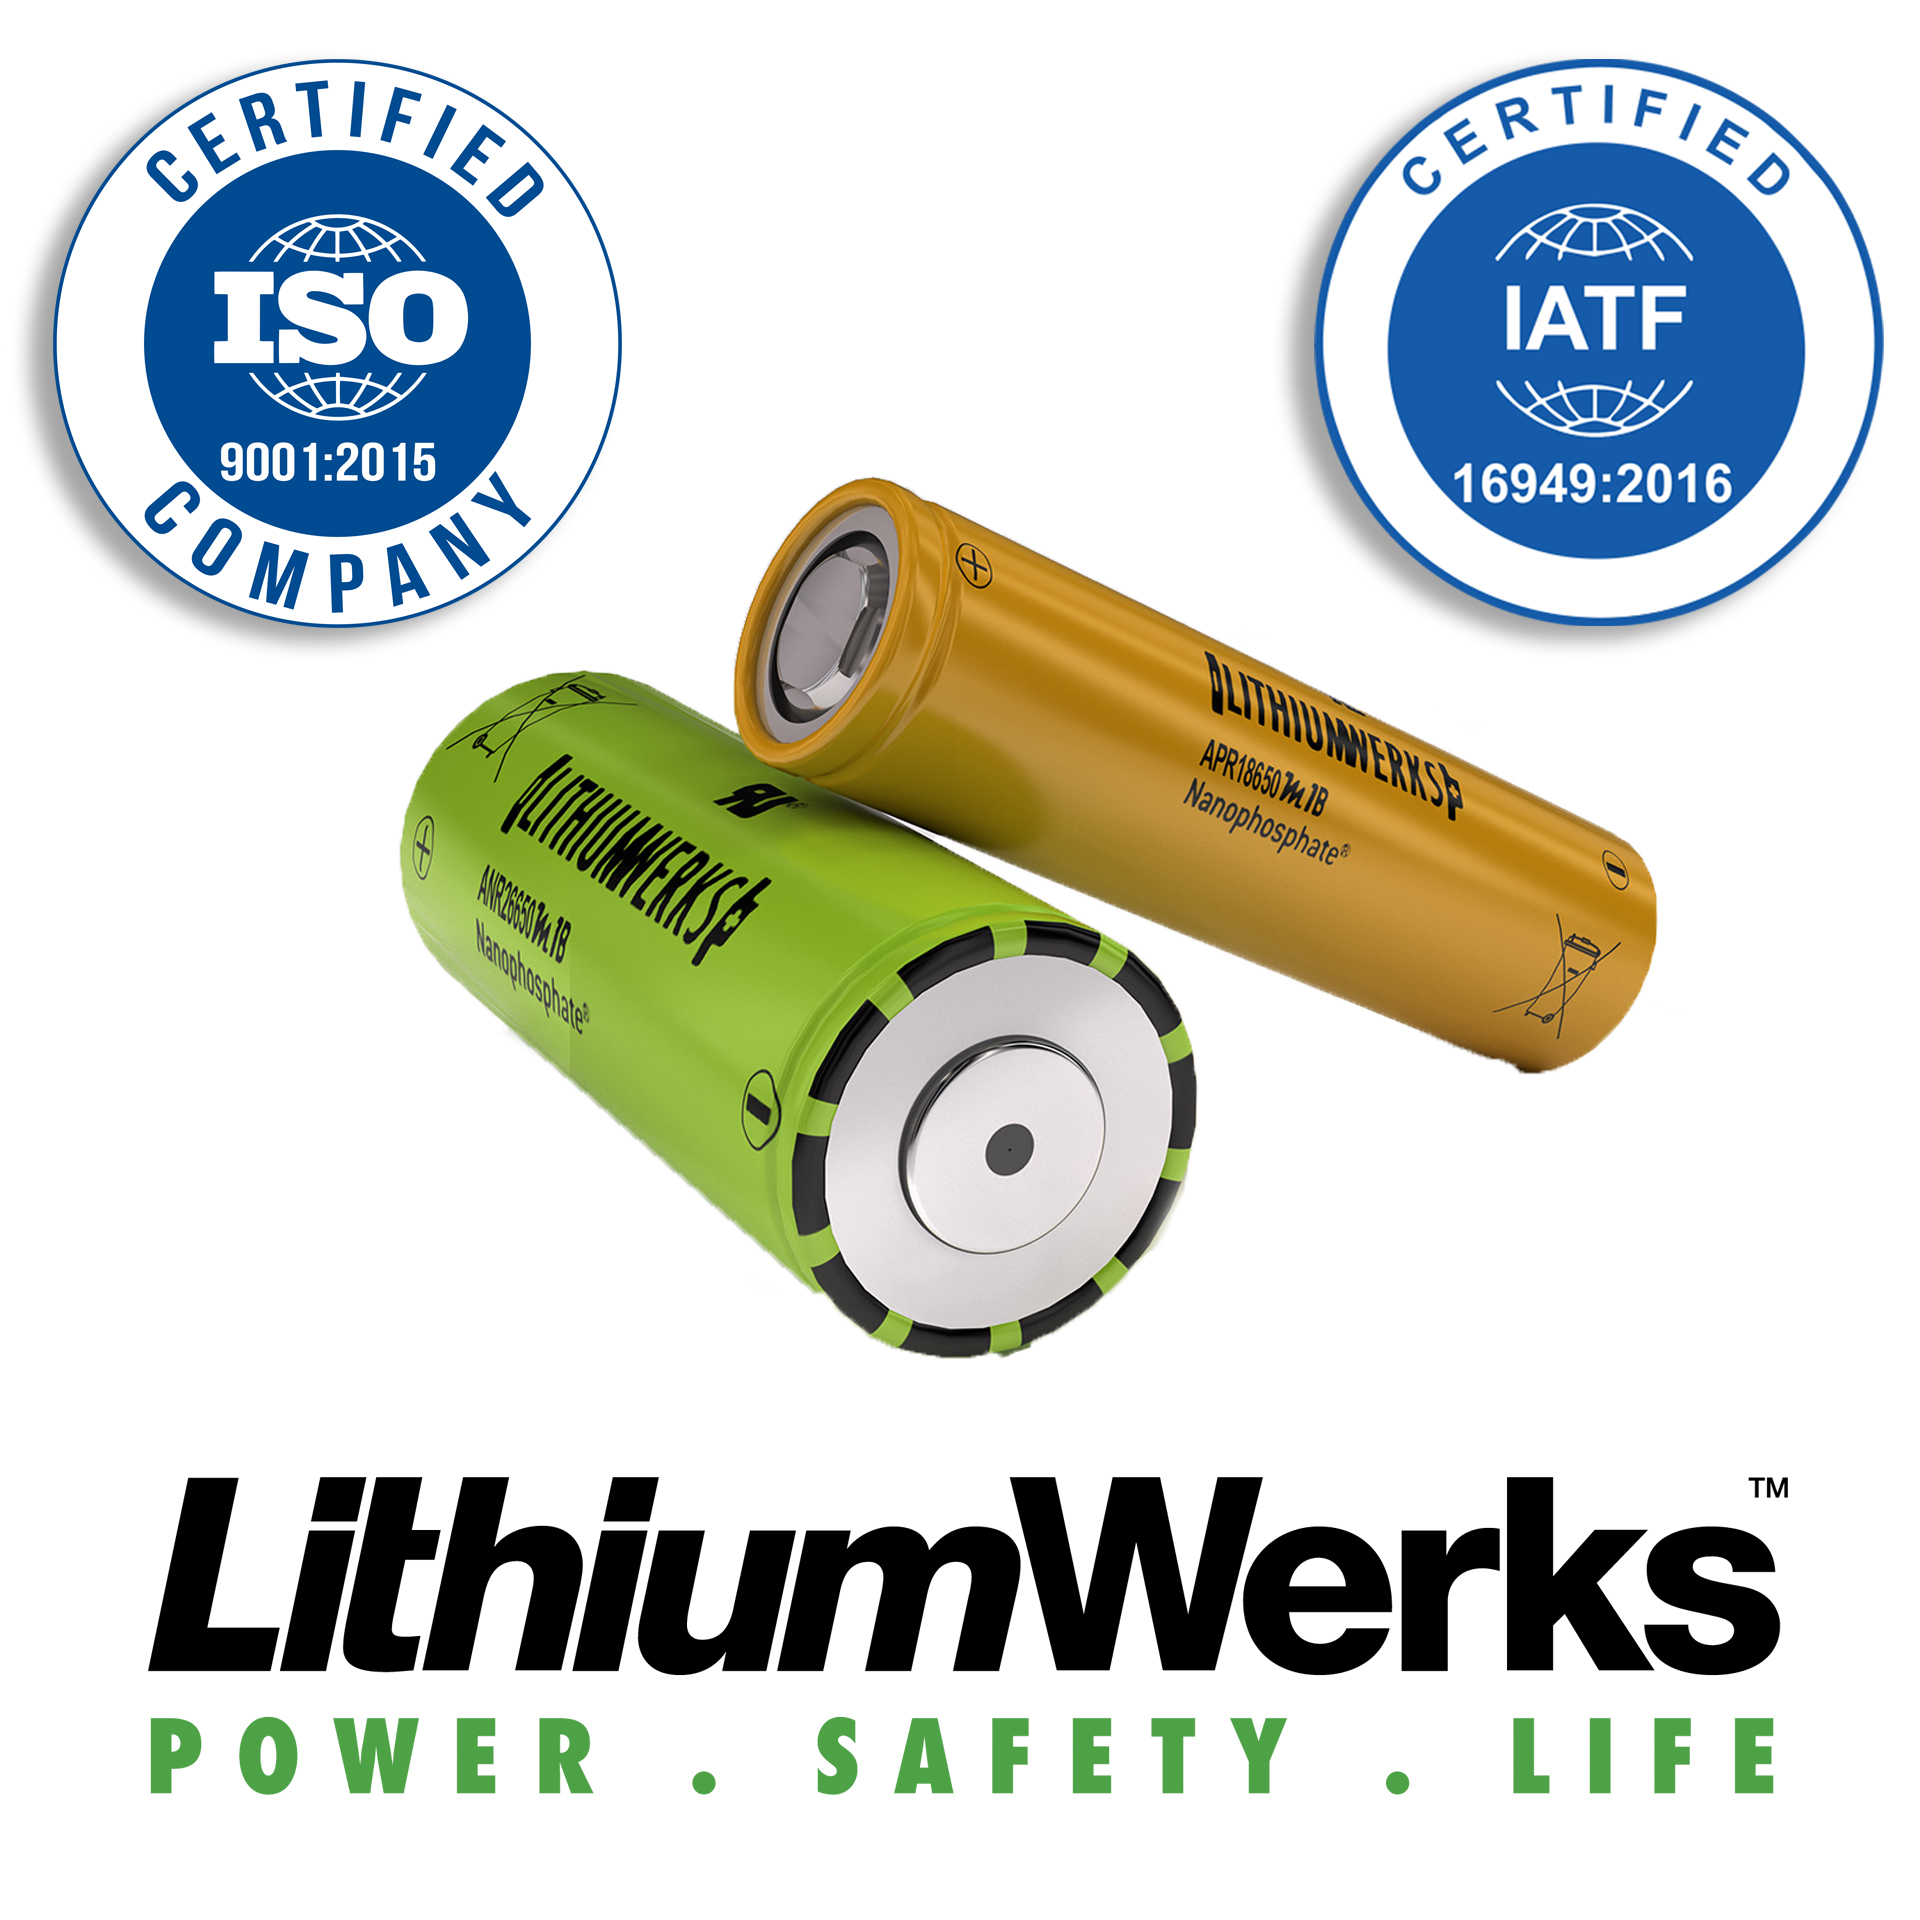 Lithium Werks Achieves IATF 16949 and Renews ISO 9001